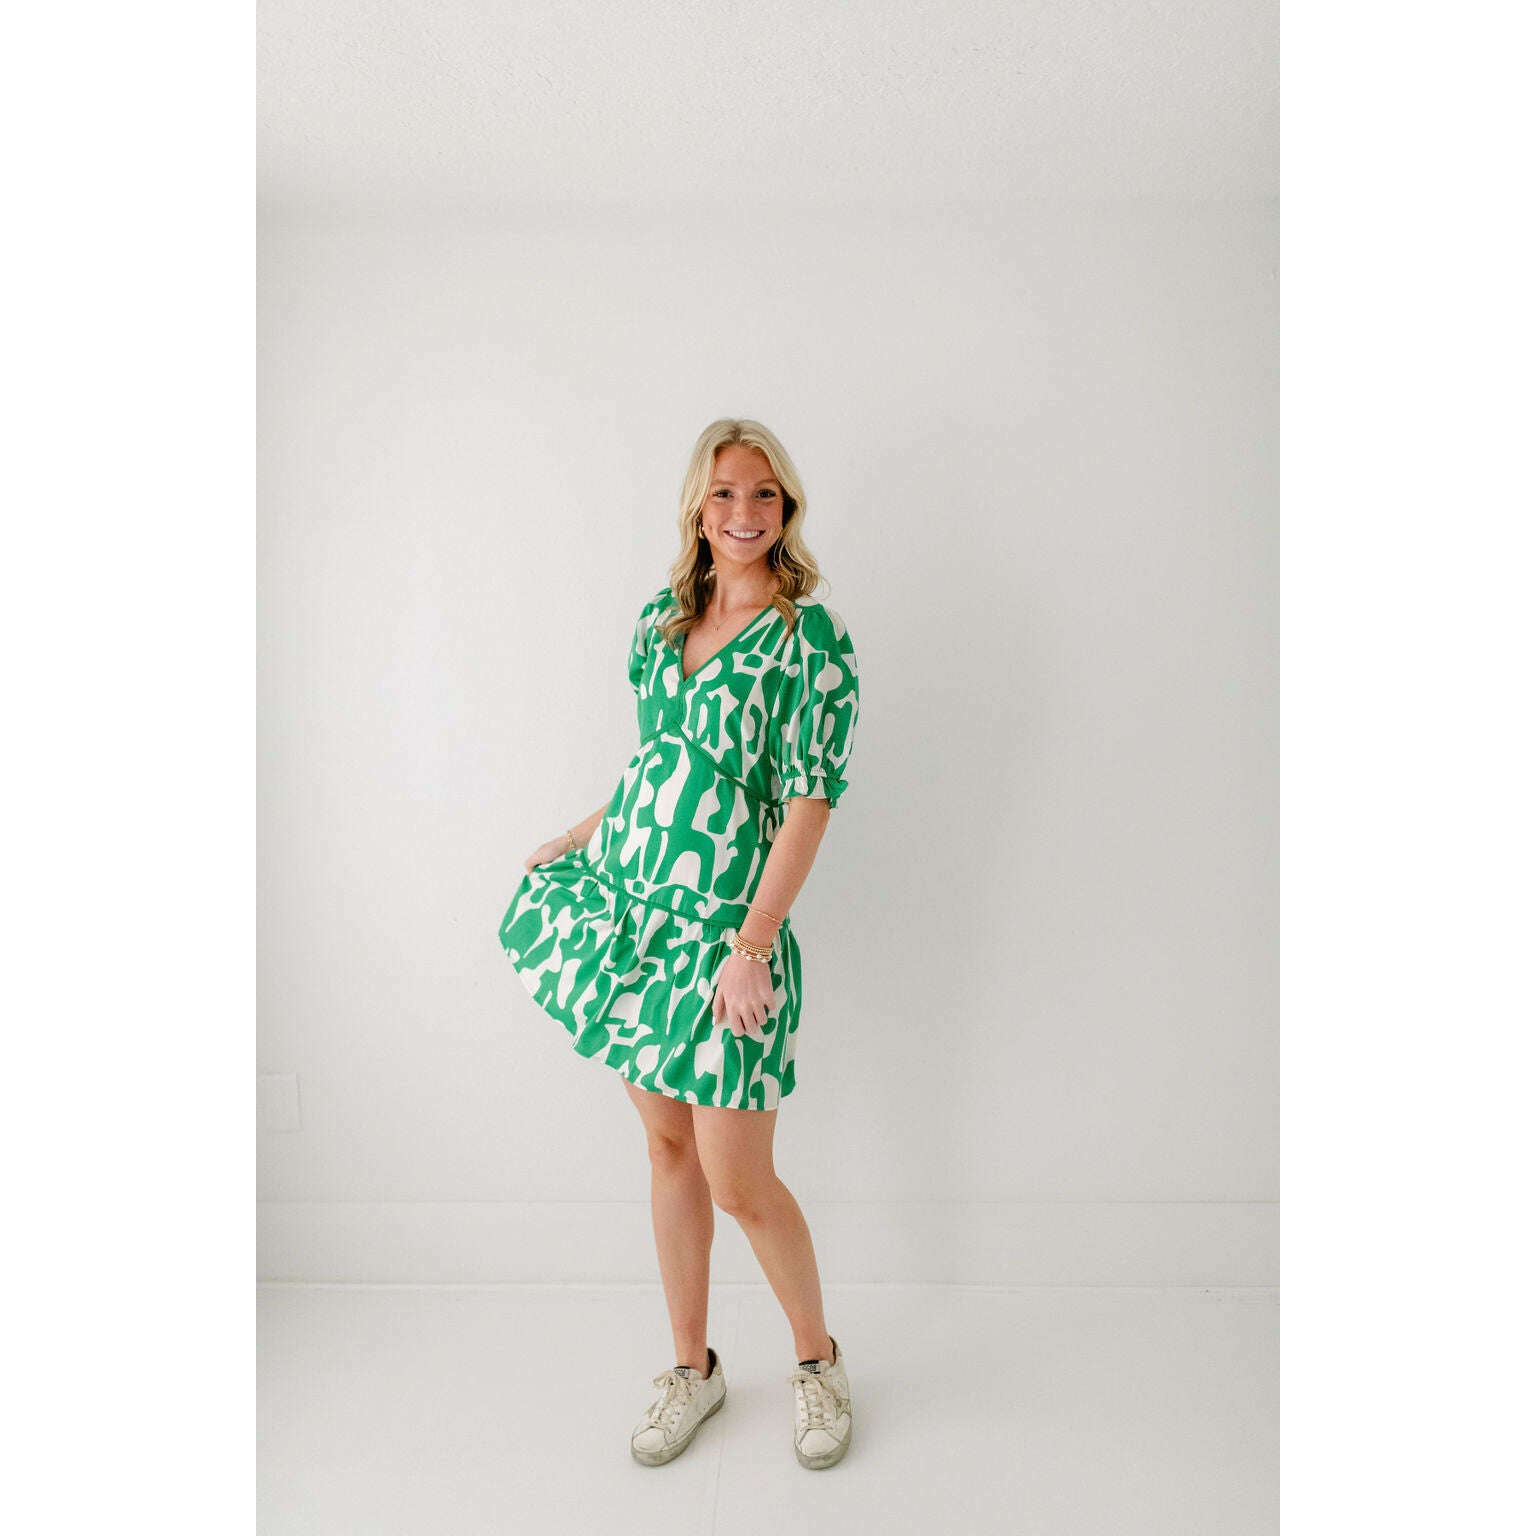 8.28 Boutique:Jade Melody Tam,Jade Melody Tam Puzzle Green Dress,Dress